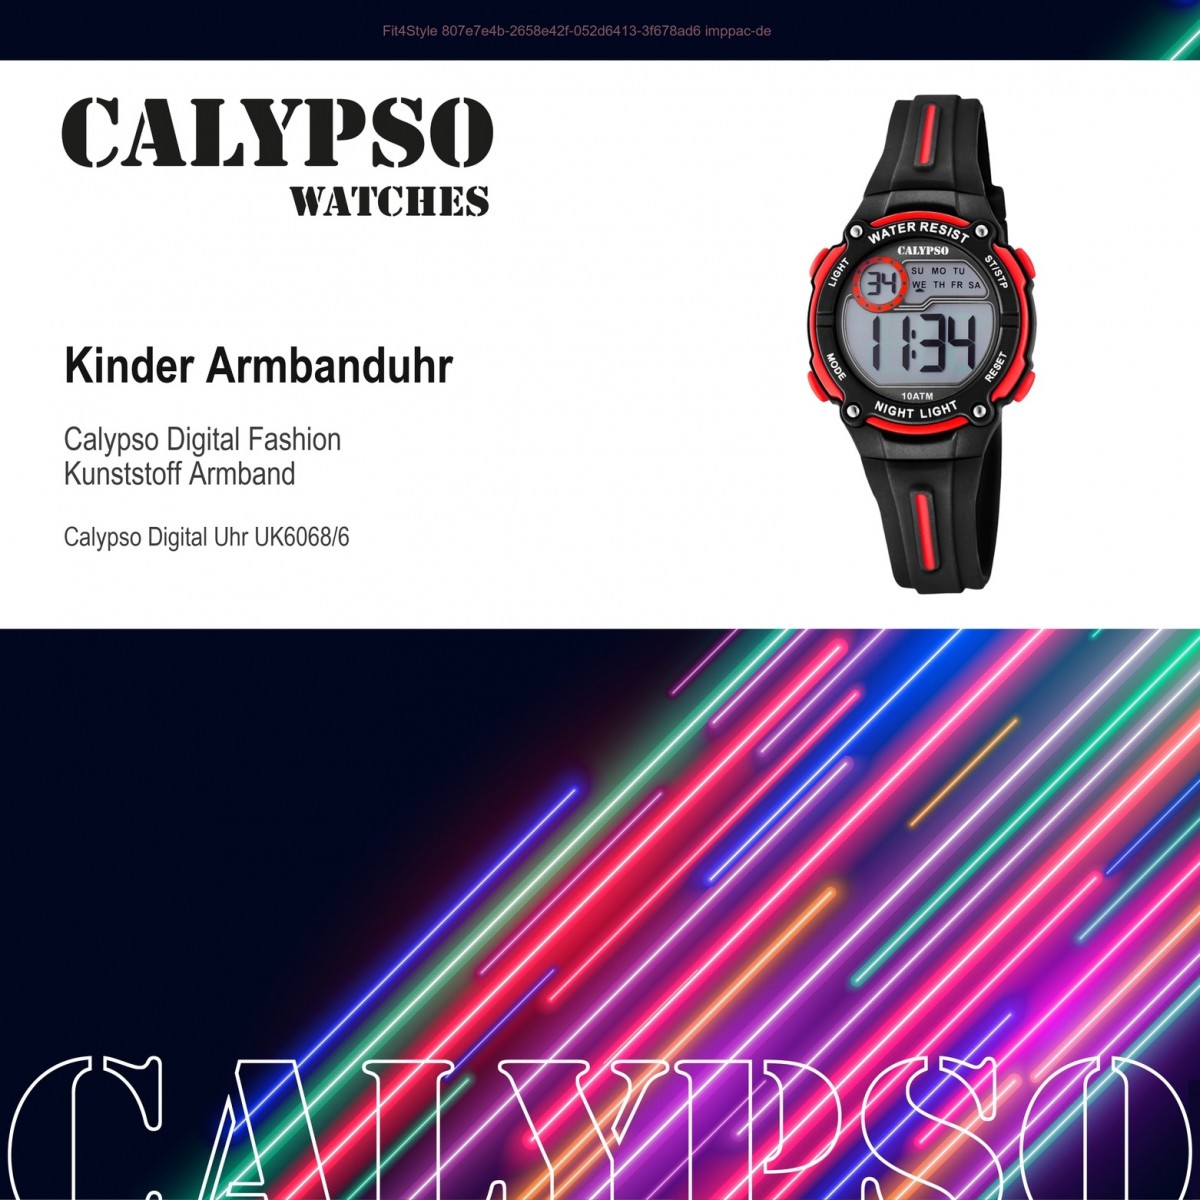 Calypso Kinder Armbanduhr Digital Crush PU schwarz UK6068/6 K6068/6 Quarz